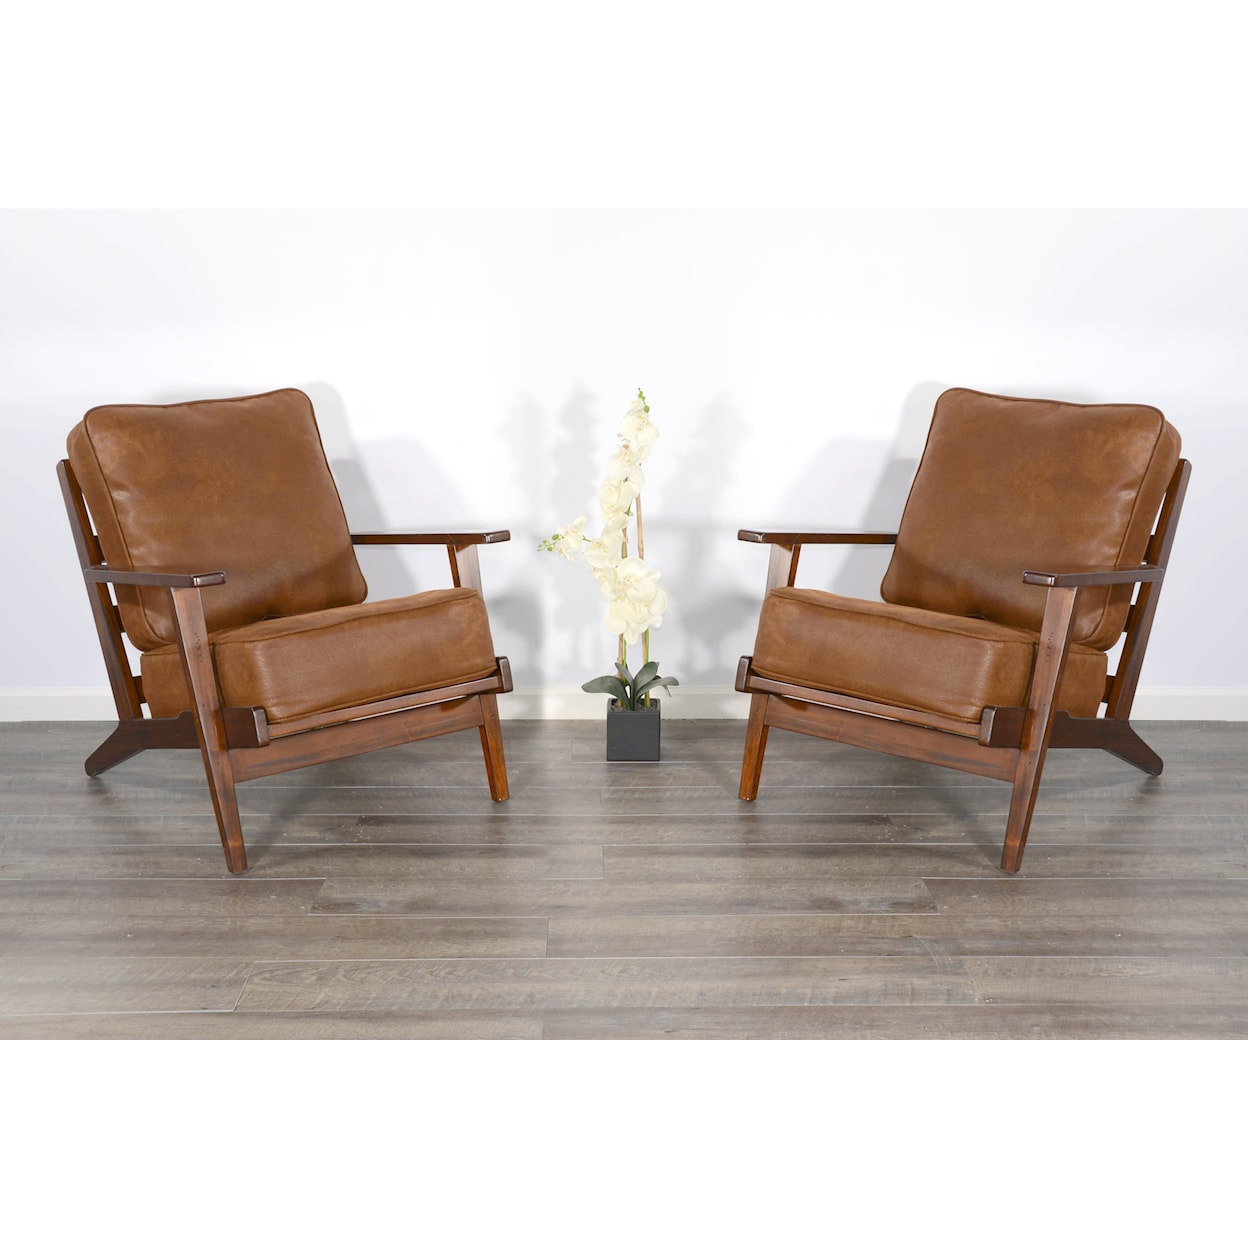 Sunny Designs Santa Fe Dark Chocolate Chair with Cushions